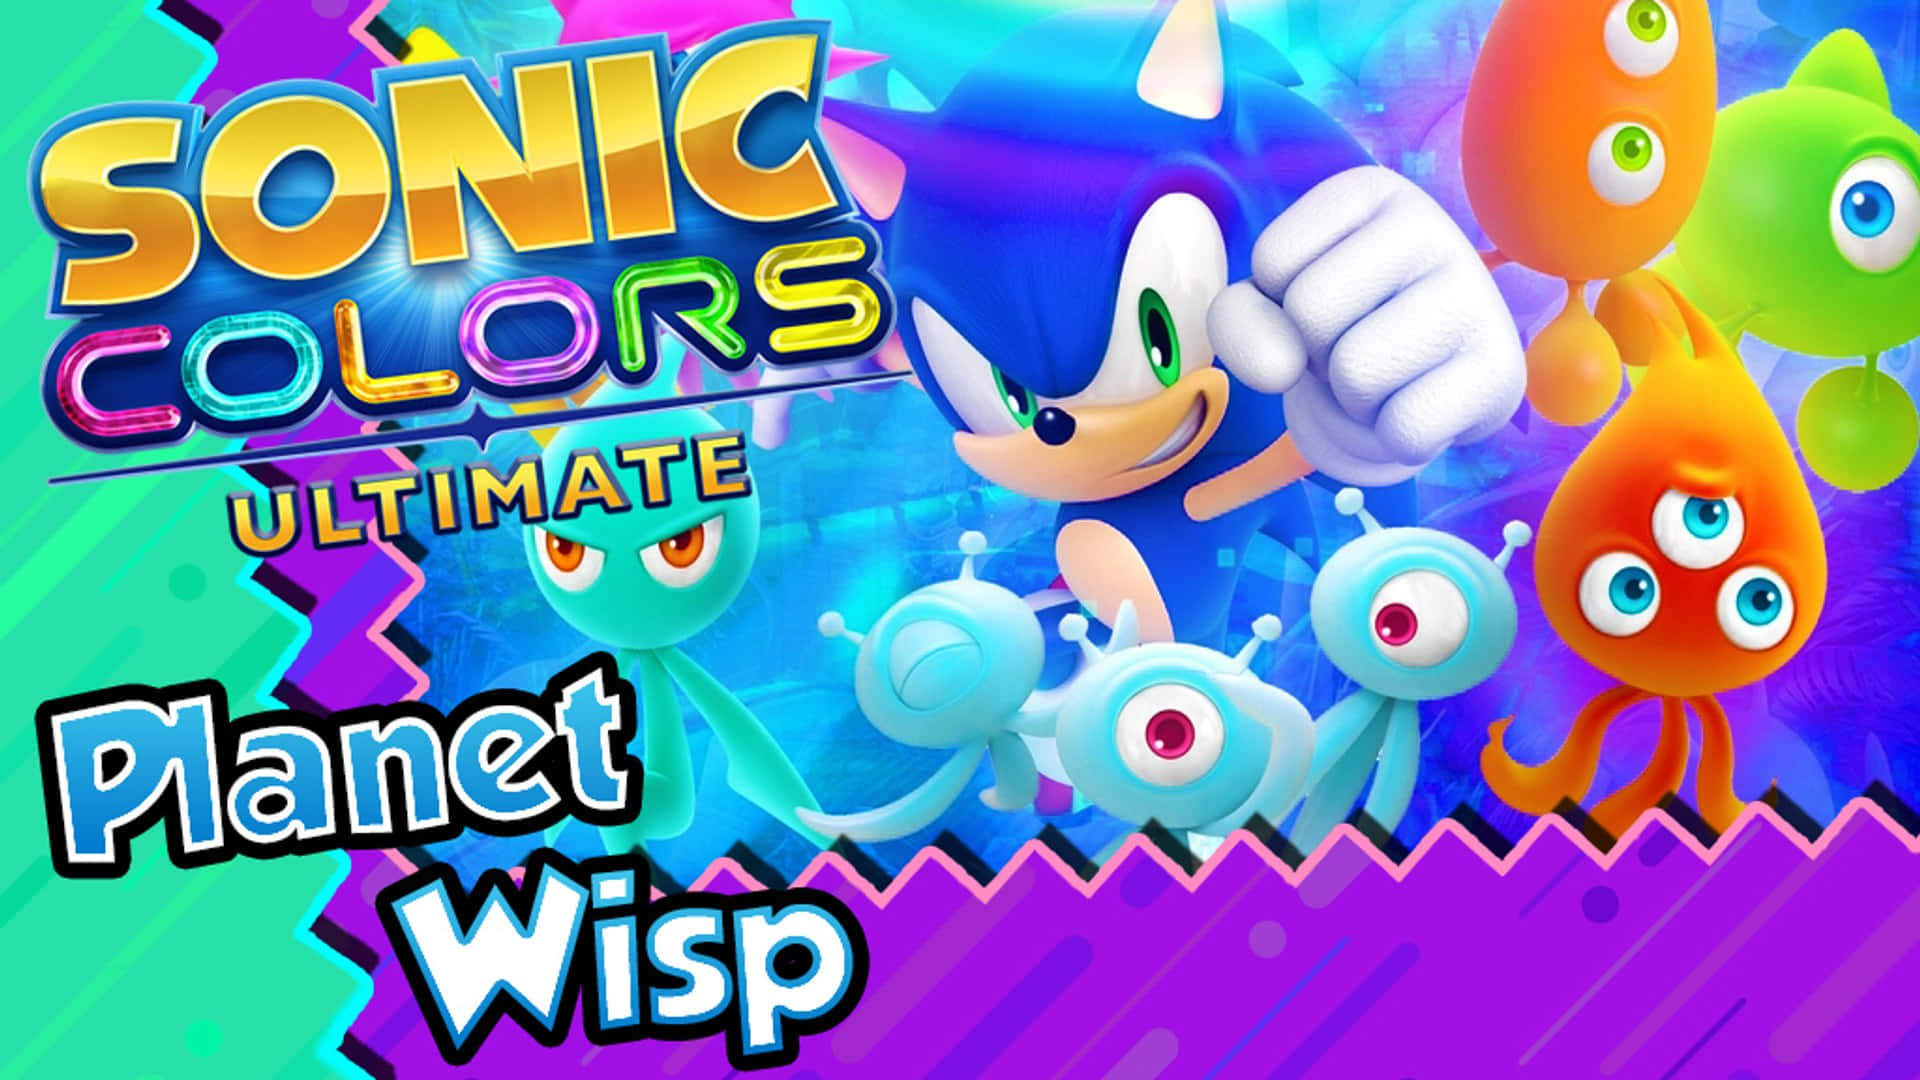 Sonic speeding through the vibrant Planet Wisp Wallpaper